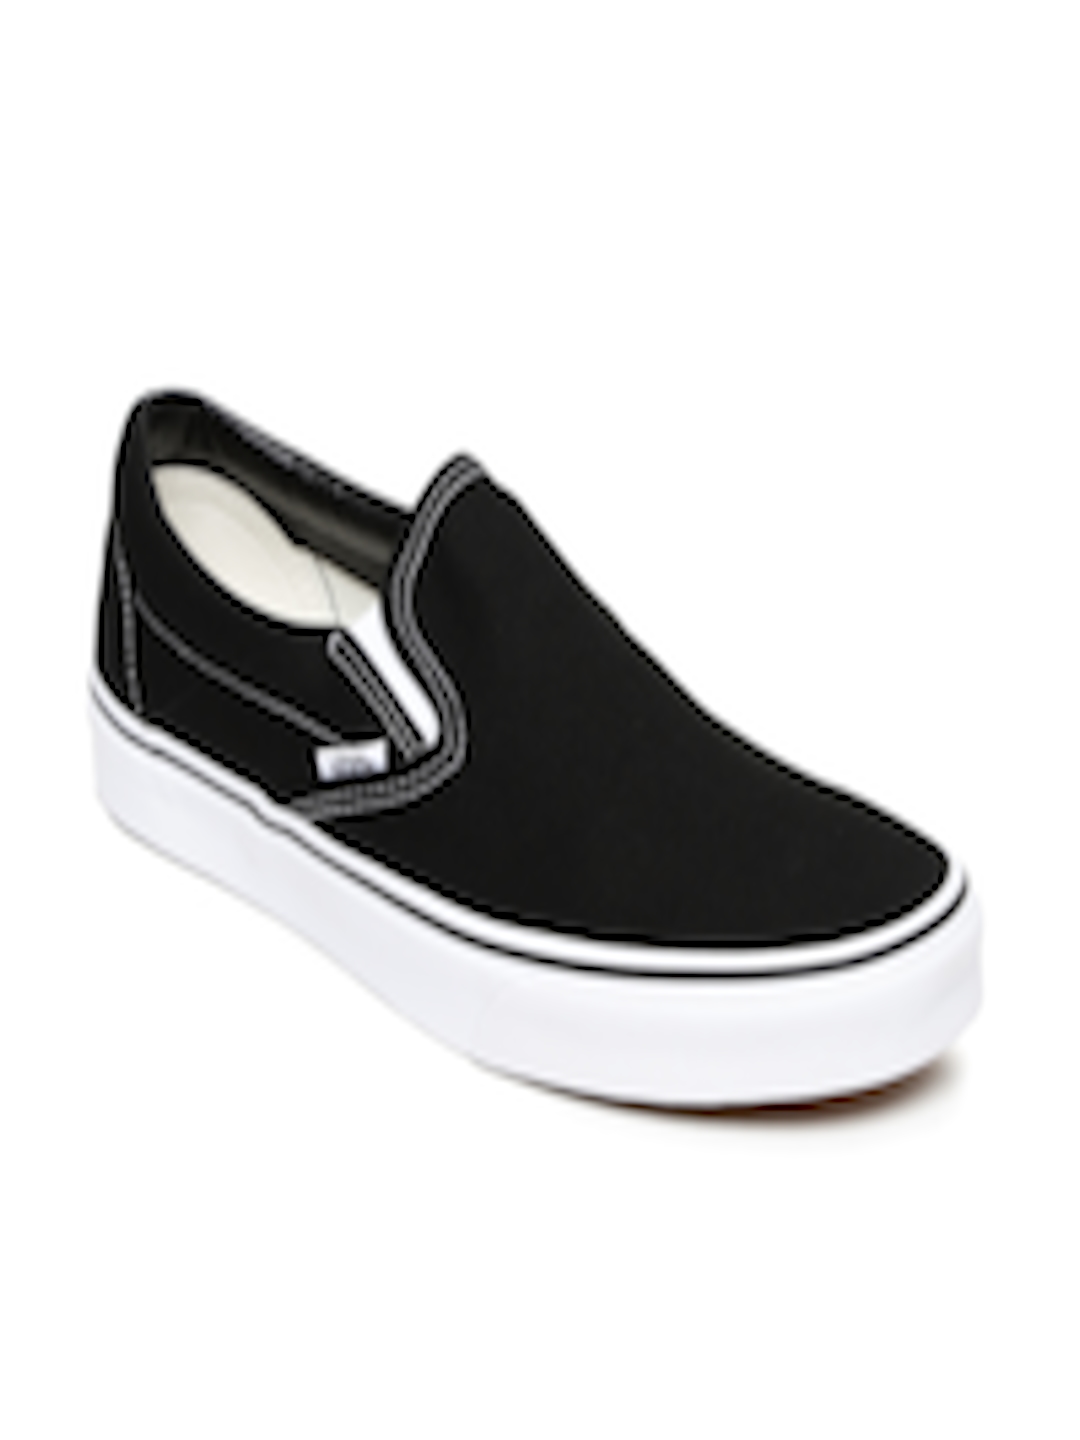 Buy Vans Men Black Classic Slip On Sneakers - Casual Shoes for Men ...